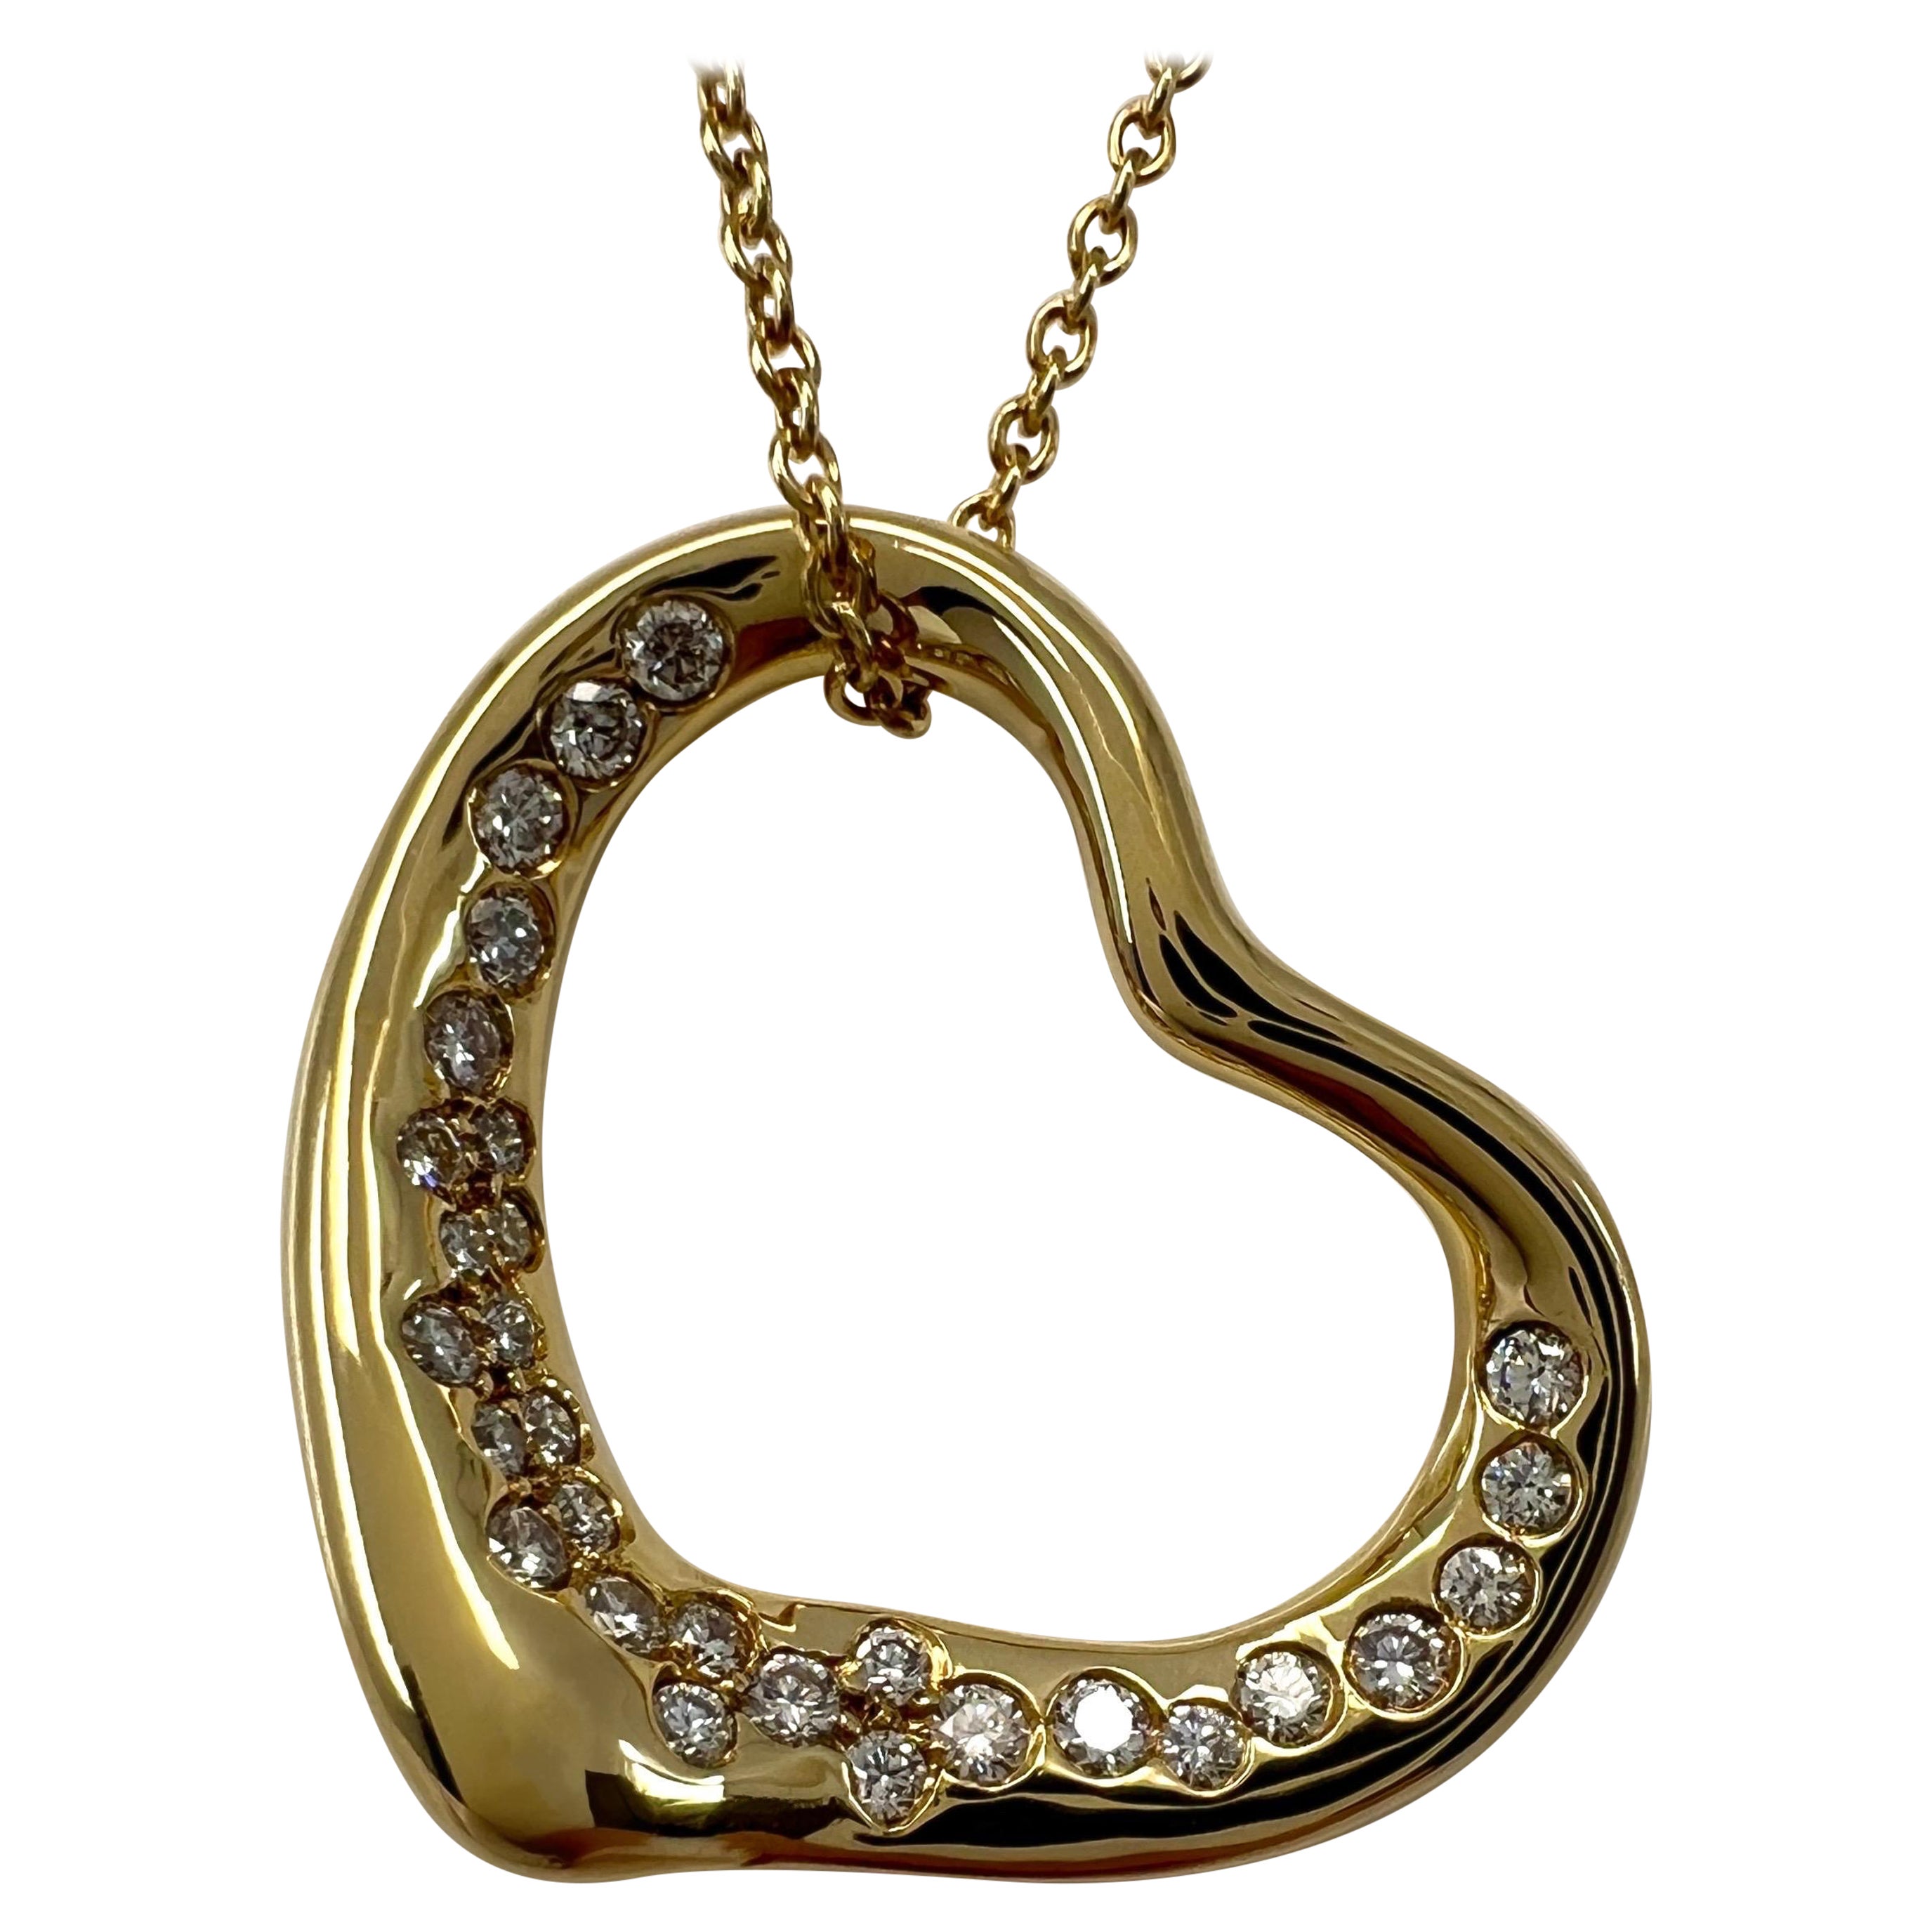 Tiffany & Co. Elsa Peretti Open Heart Diamond 18k Yellow Gold Pendant Necklace